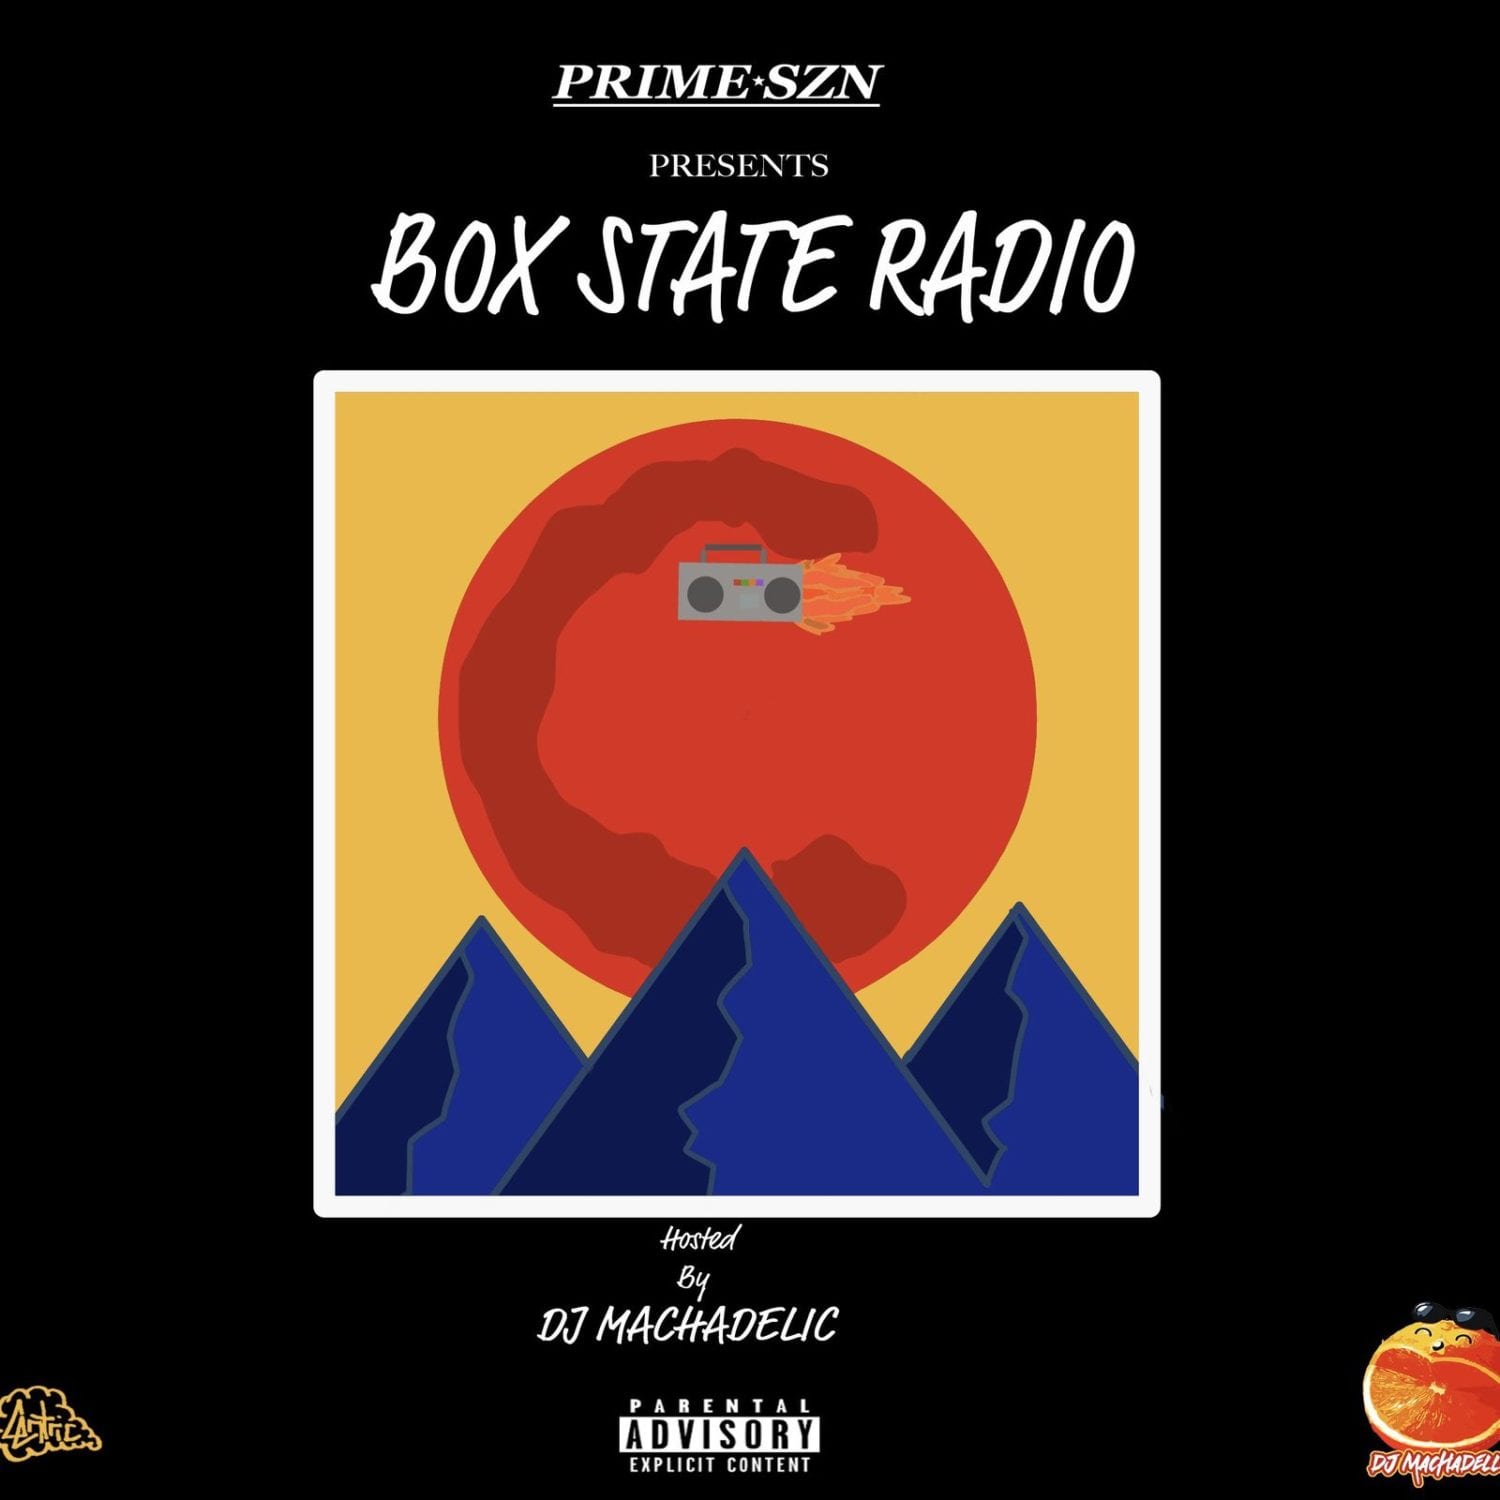 New Mixtape By DJ Machadellic - "Box State Radio"